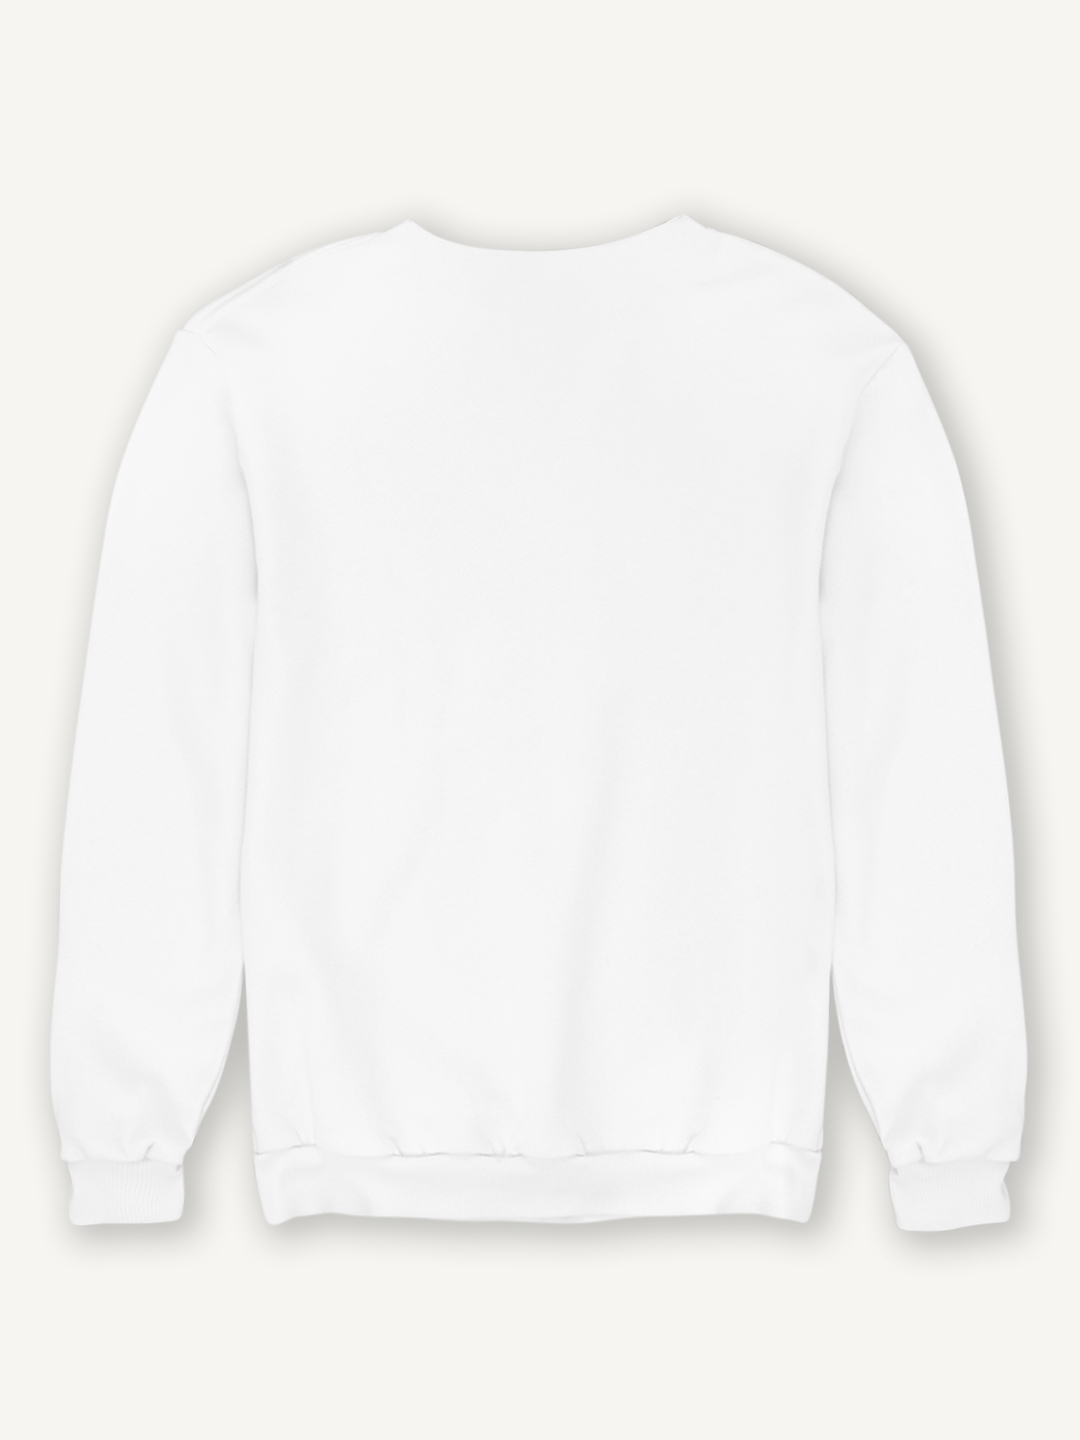 creativeideas.store | Christmas Cap White Unisex Cotton Sweatshirt 1